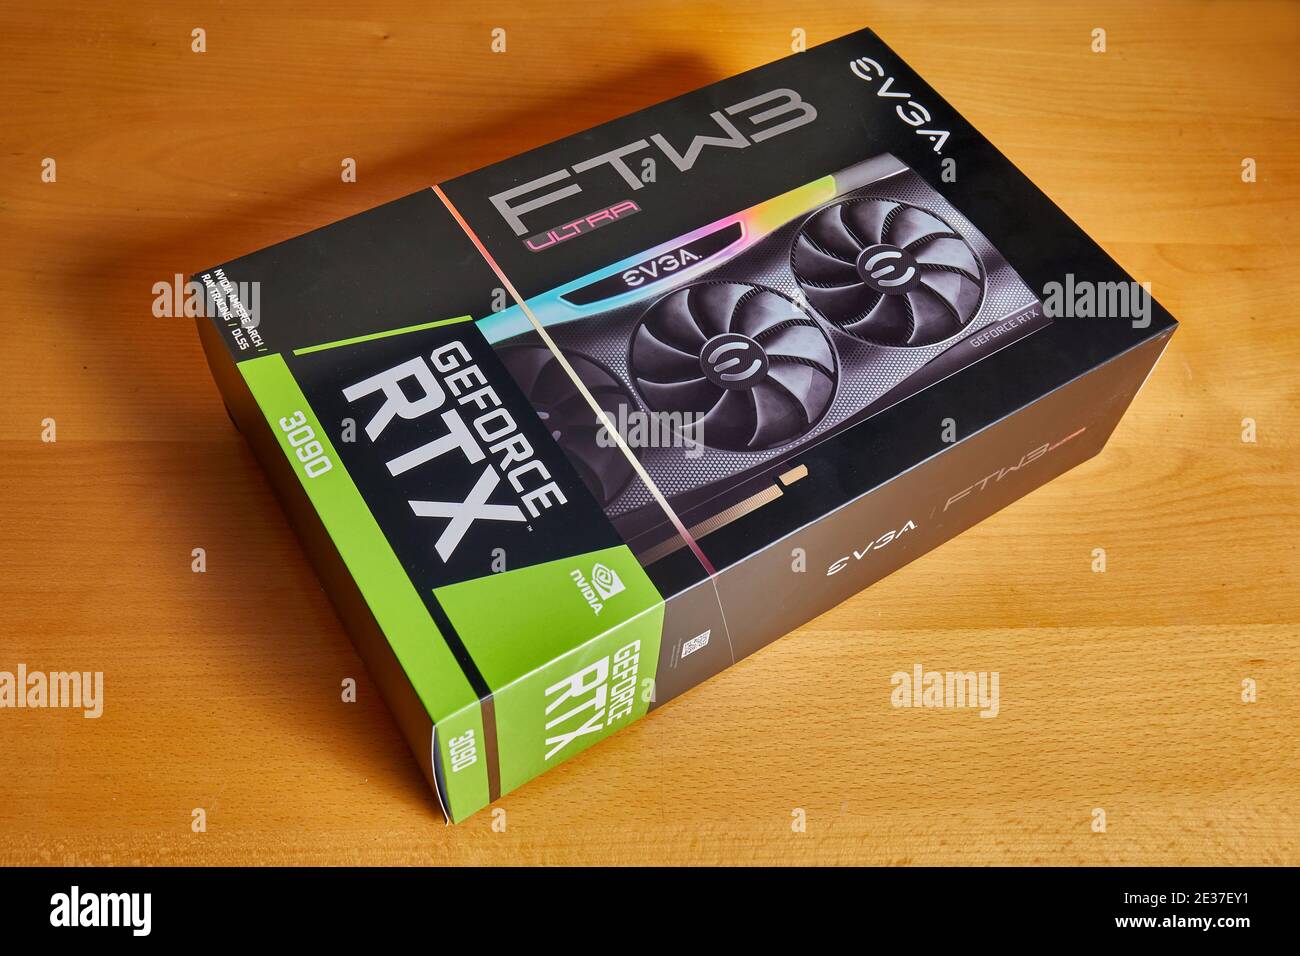 EVGA Geforce RTX 3090 Nvidia GPU box Stock Photo - Alamy